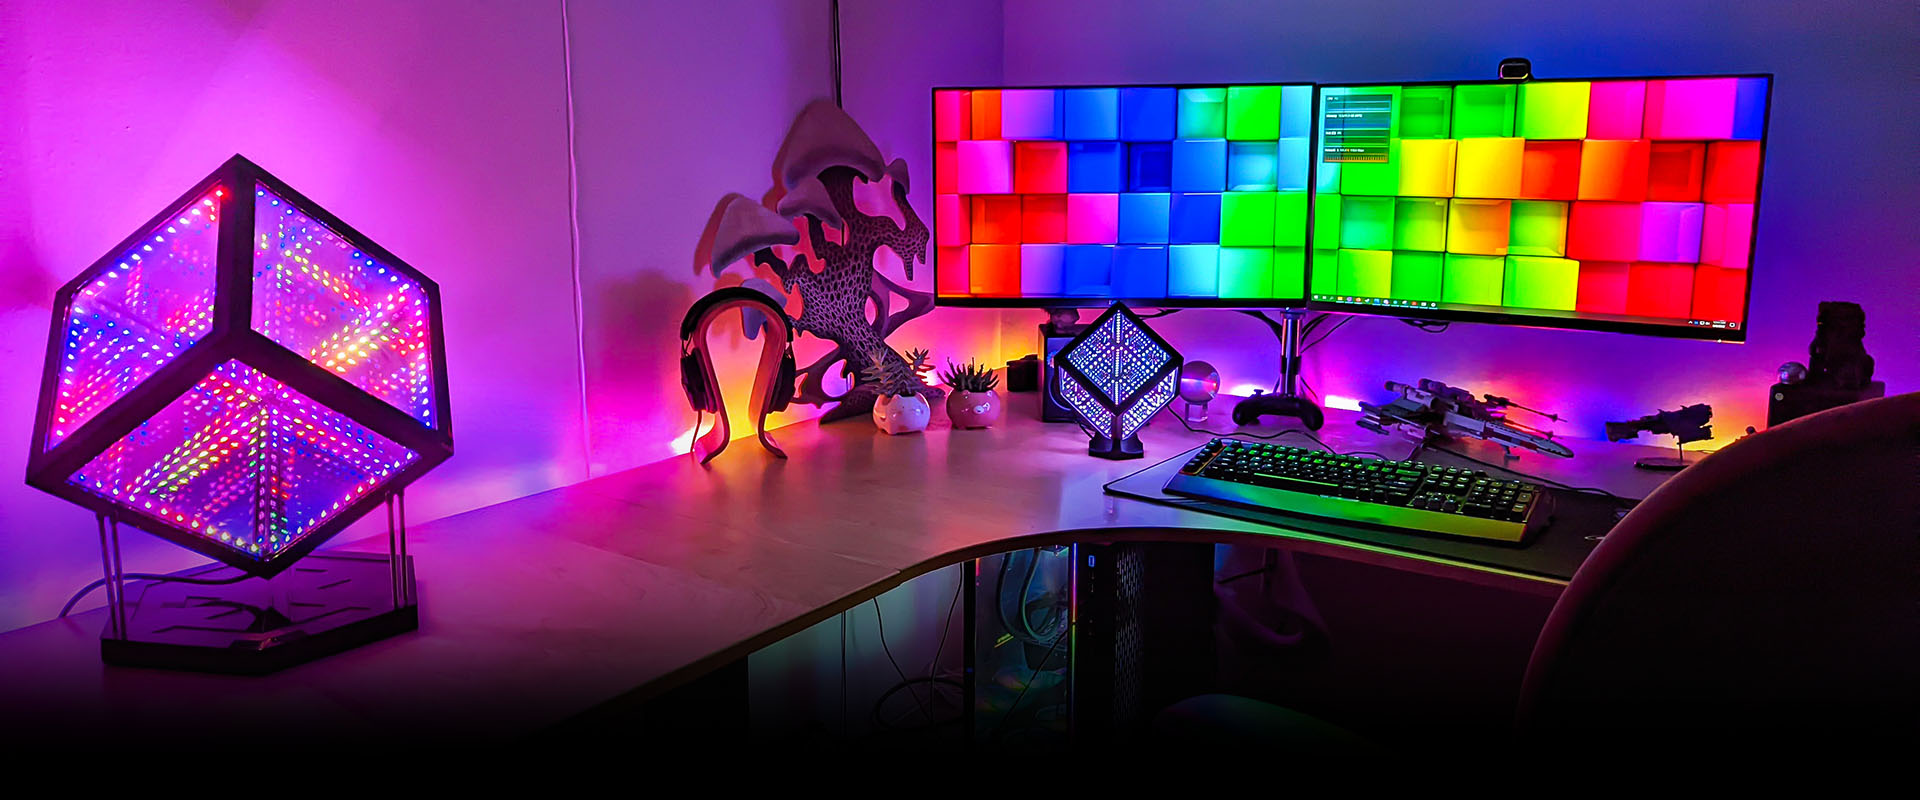 man cave desk setup